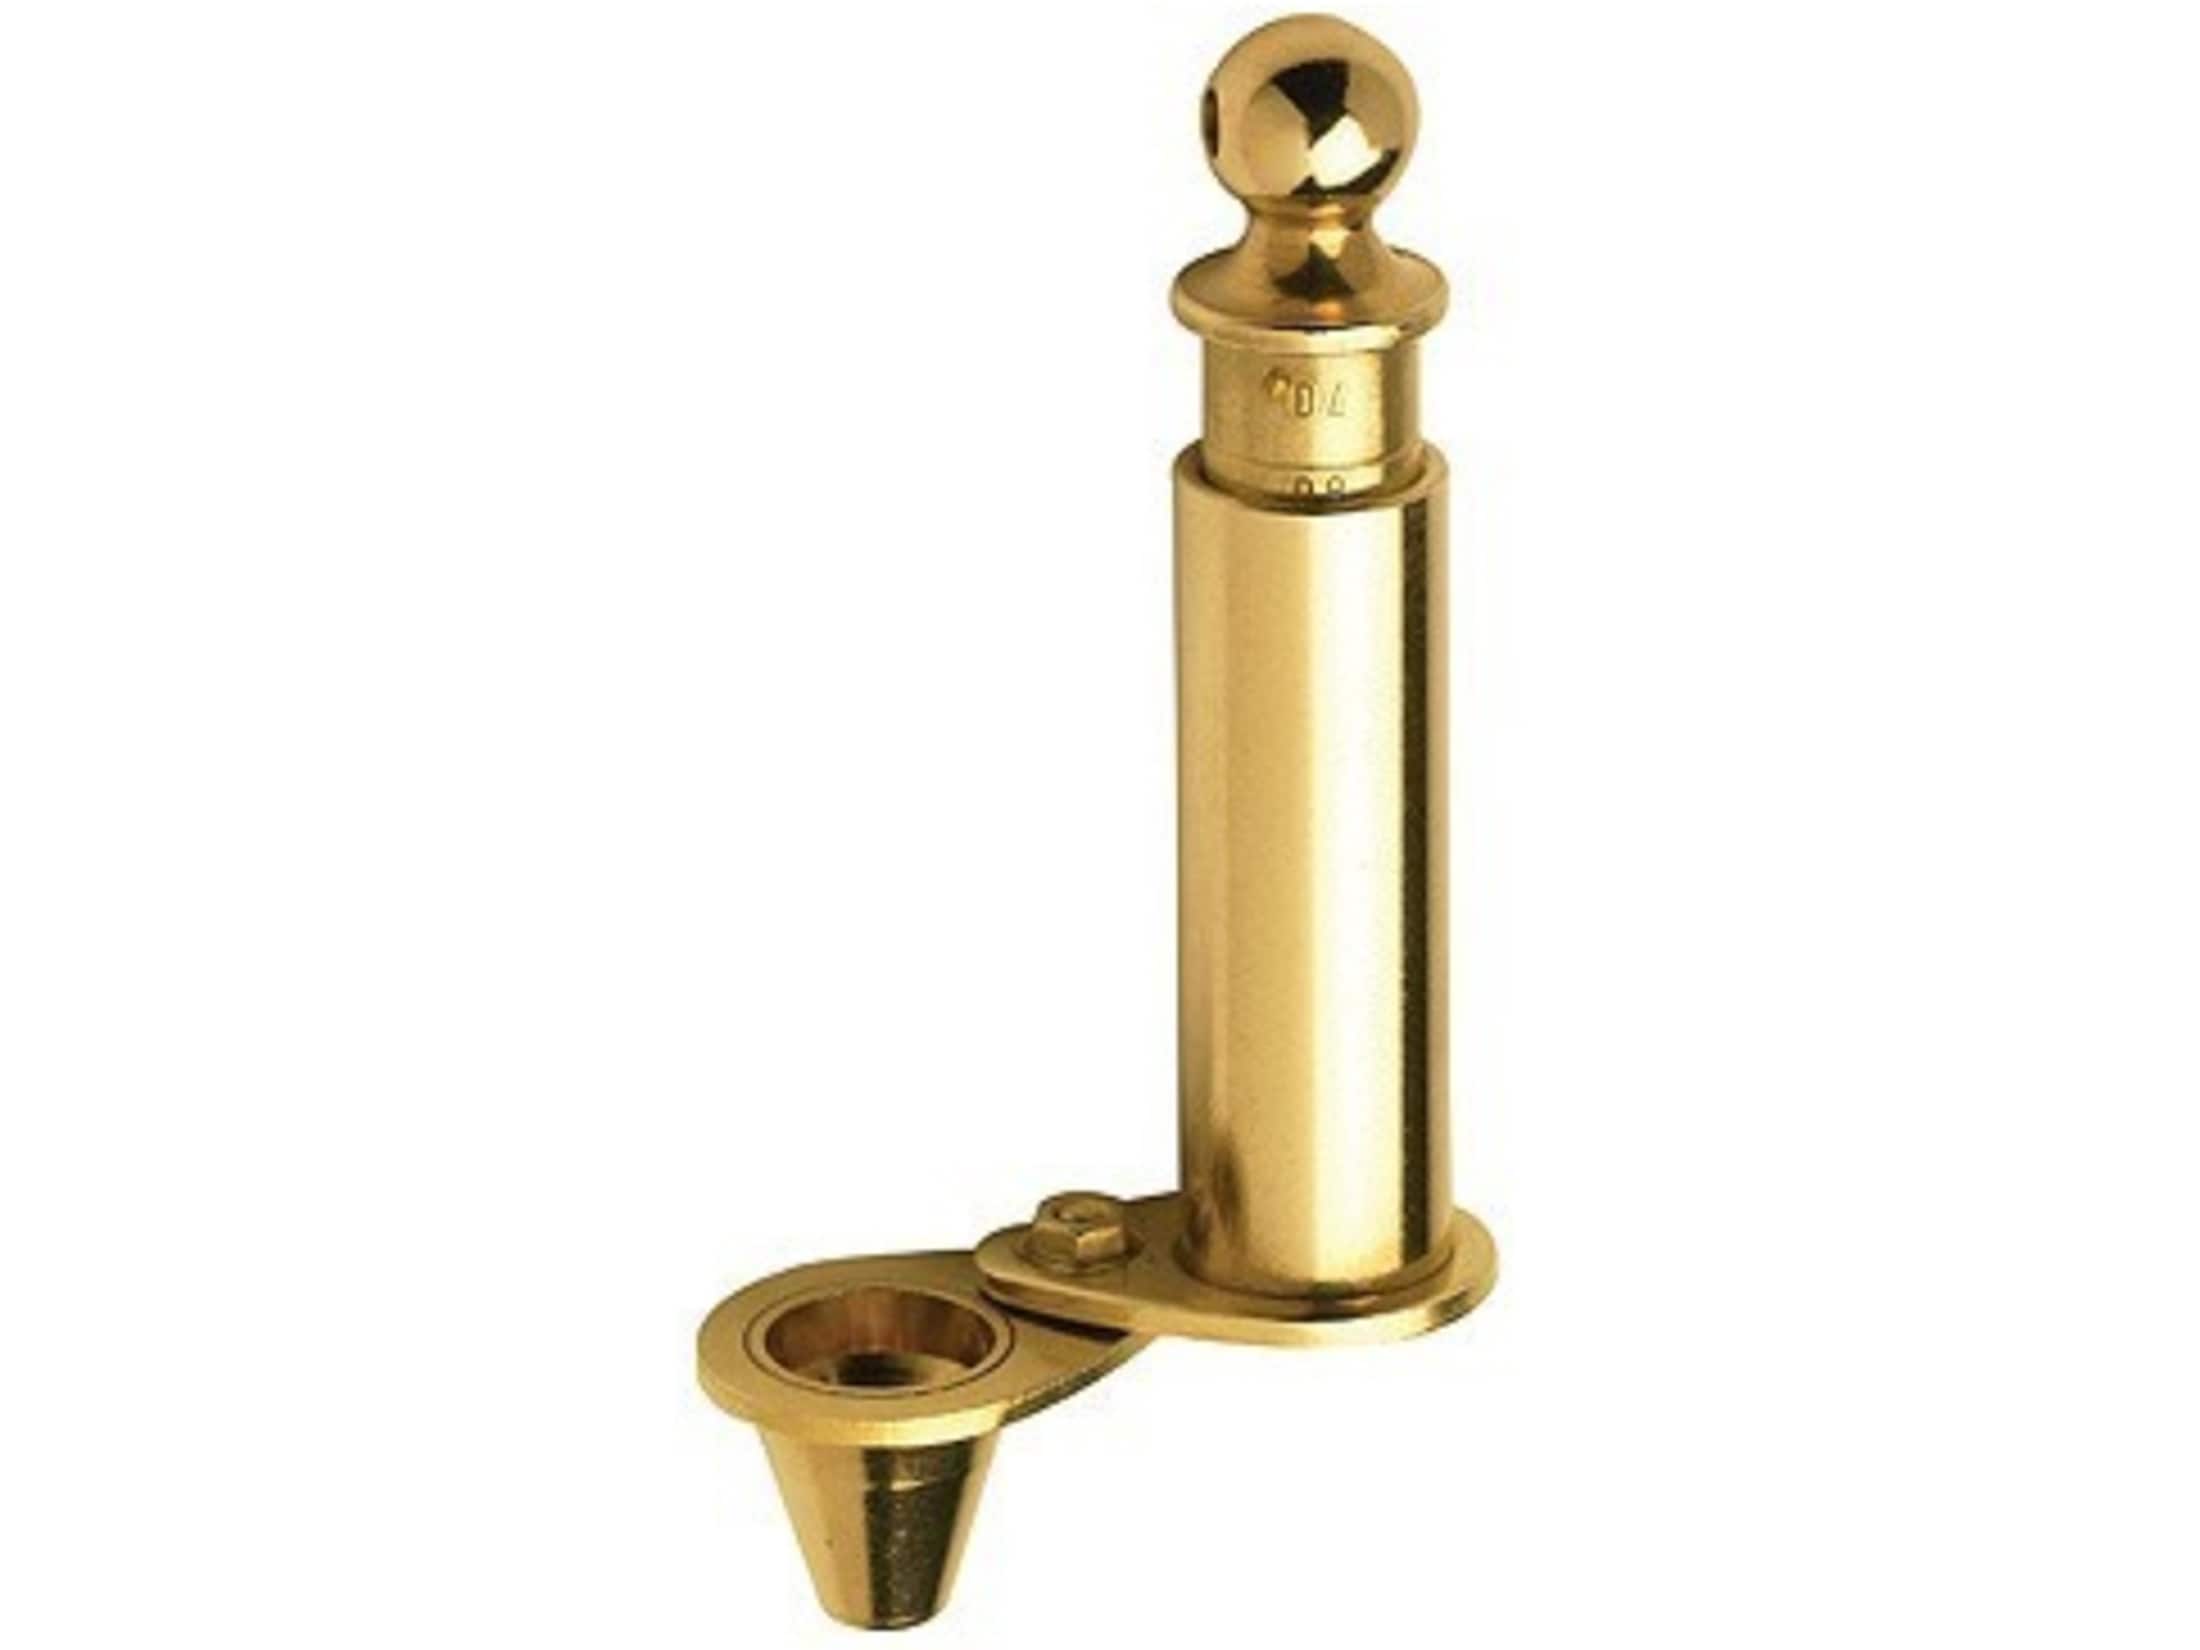 Image of CVA Adjustable Trophy Powder Measure Black Powder Solid Brass